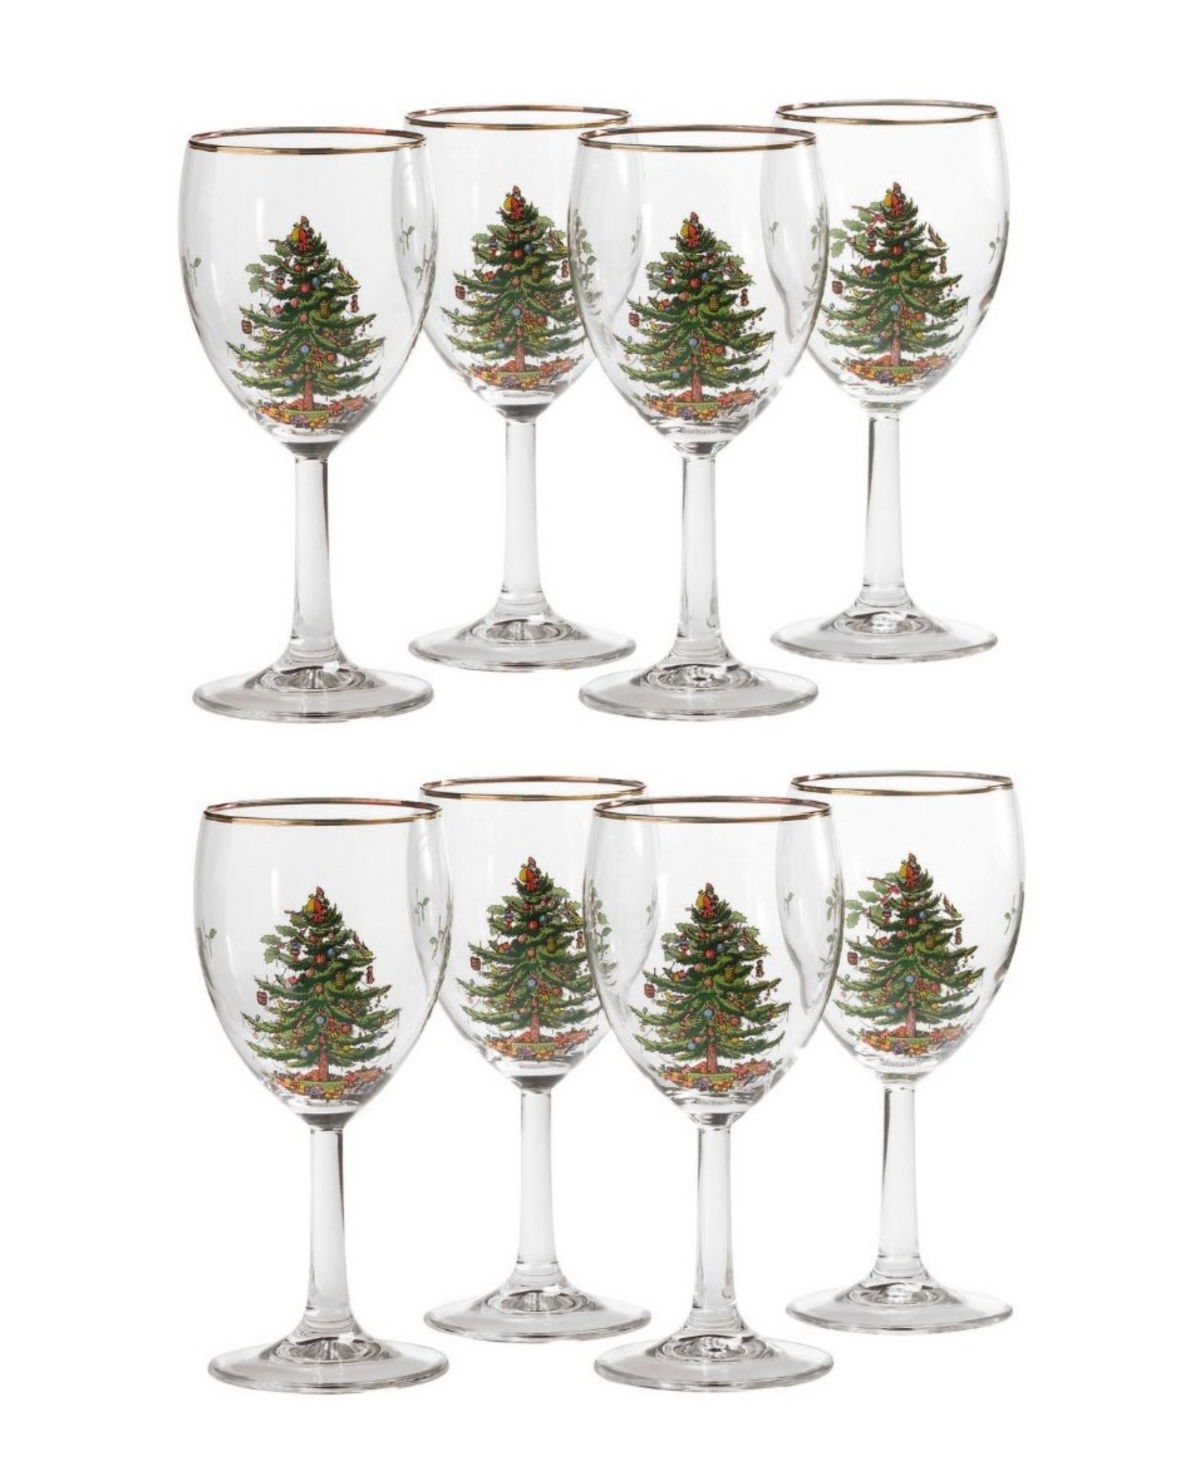 Christmas Tree Wine Glasses, Set of 8 - Green